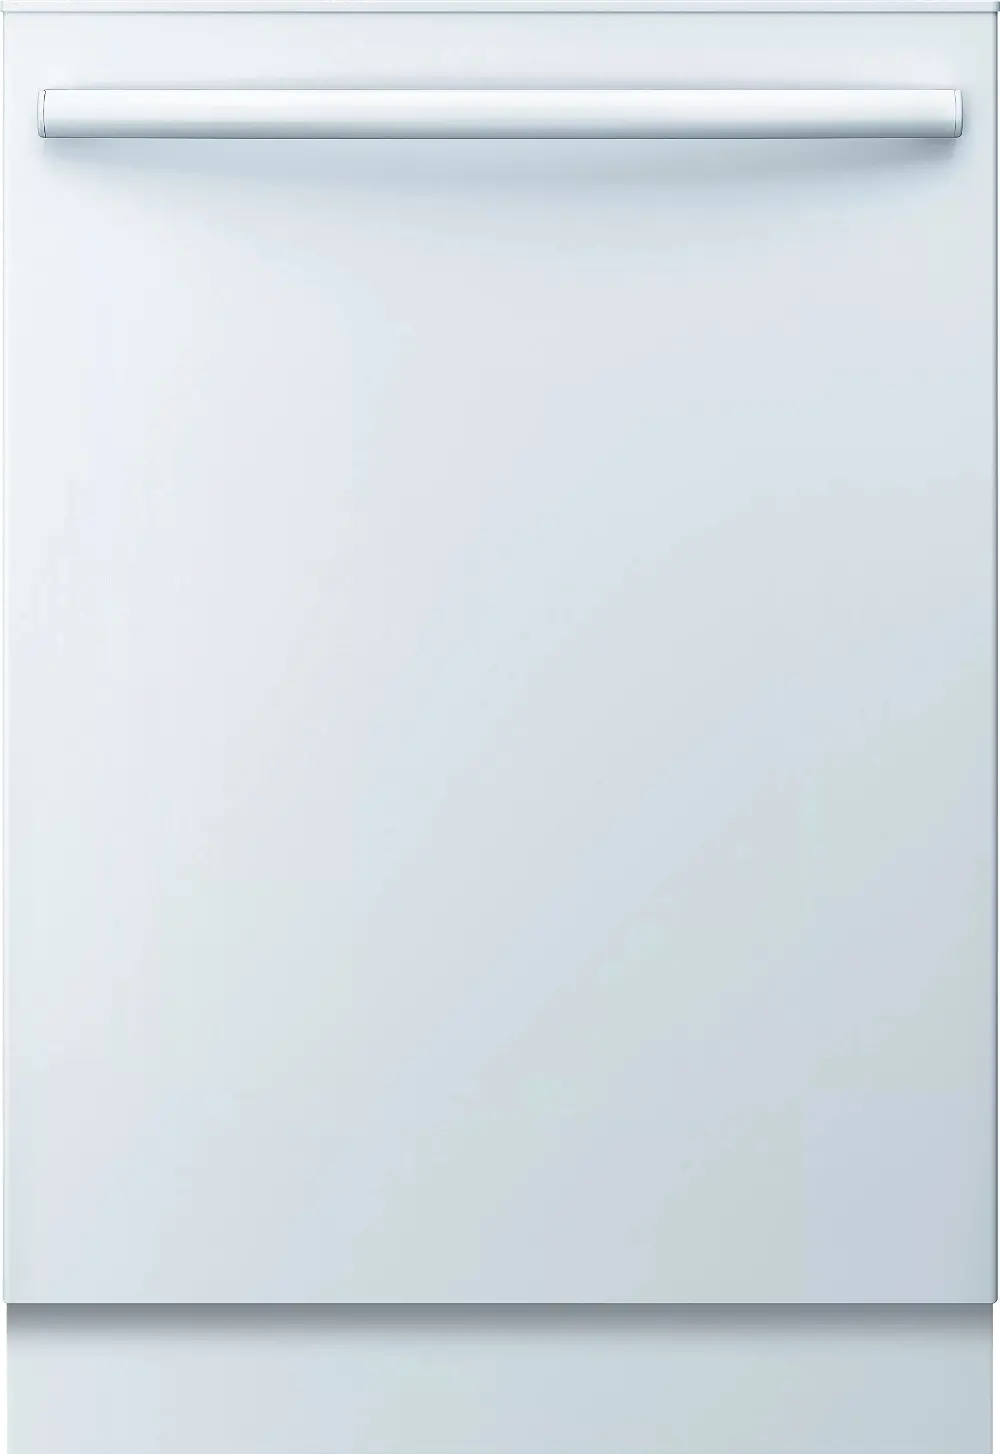 SHX3AR72UC Bosch Ascenta Top Control Dishwasher - White-1